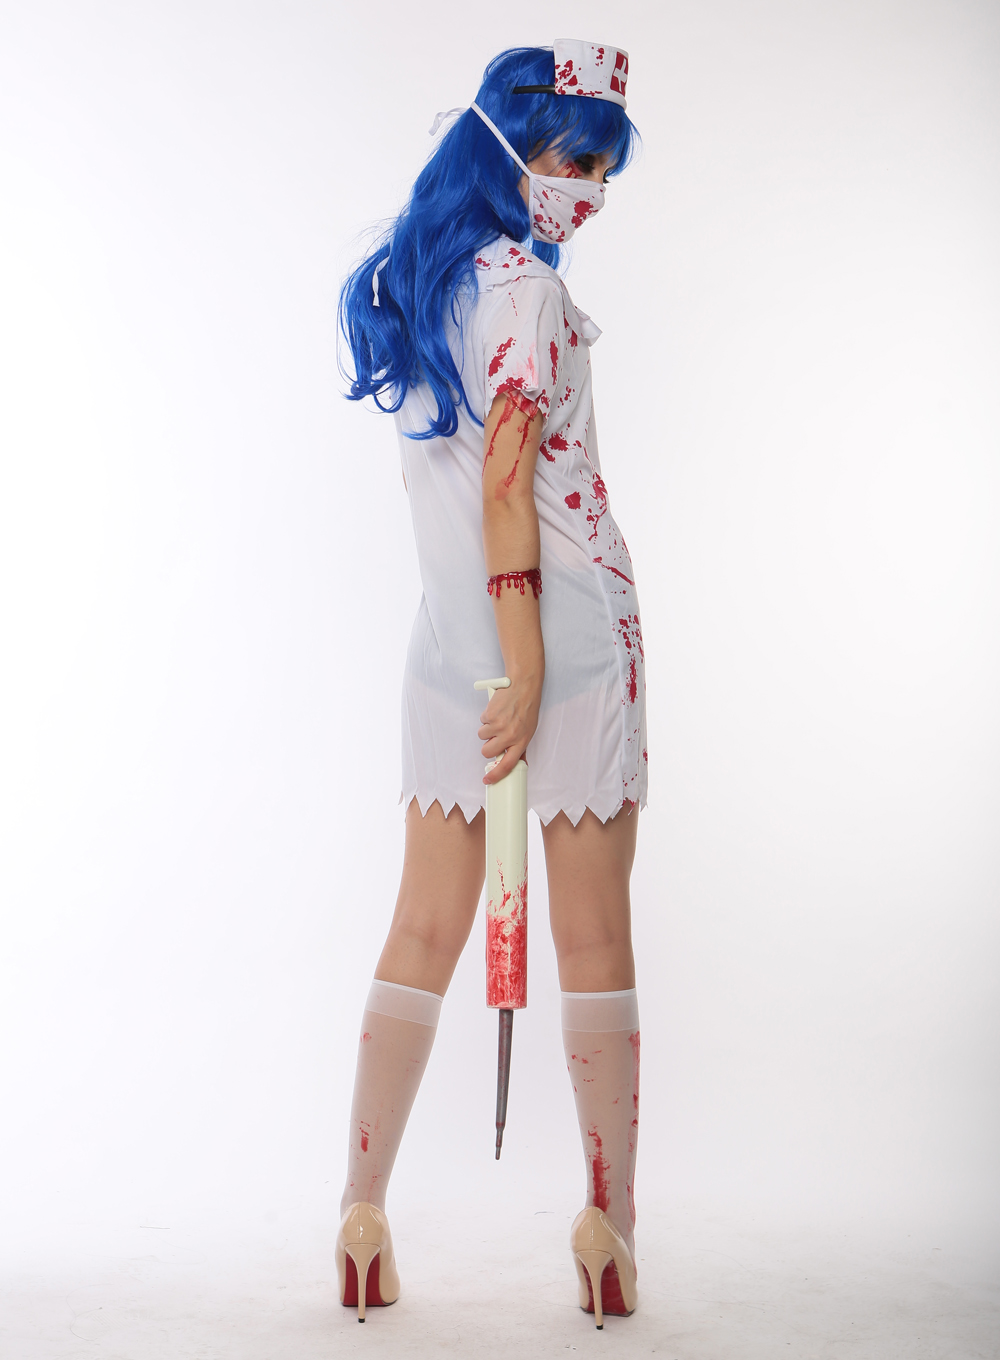 F1712 halloween zombie nurse costume,it comes with headwear,dress